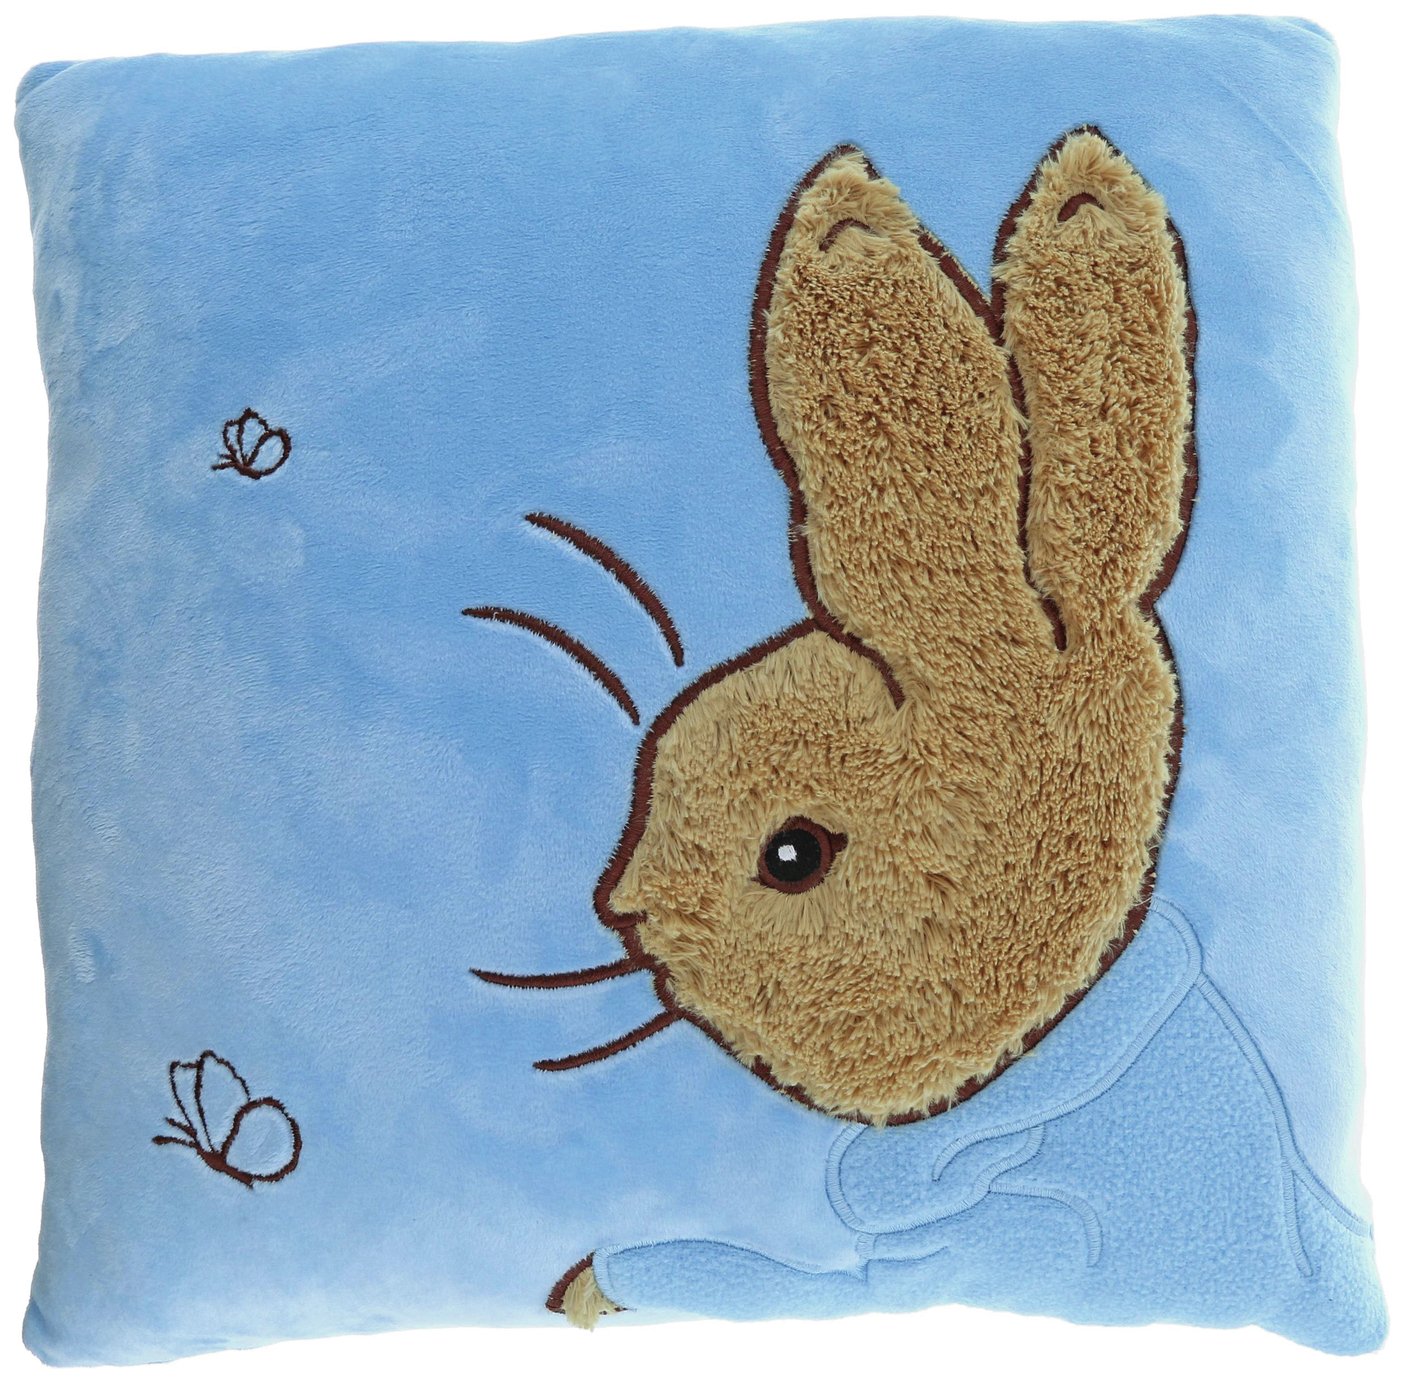 Beatrix Potter Peter Rabbit Cushion review